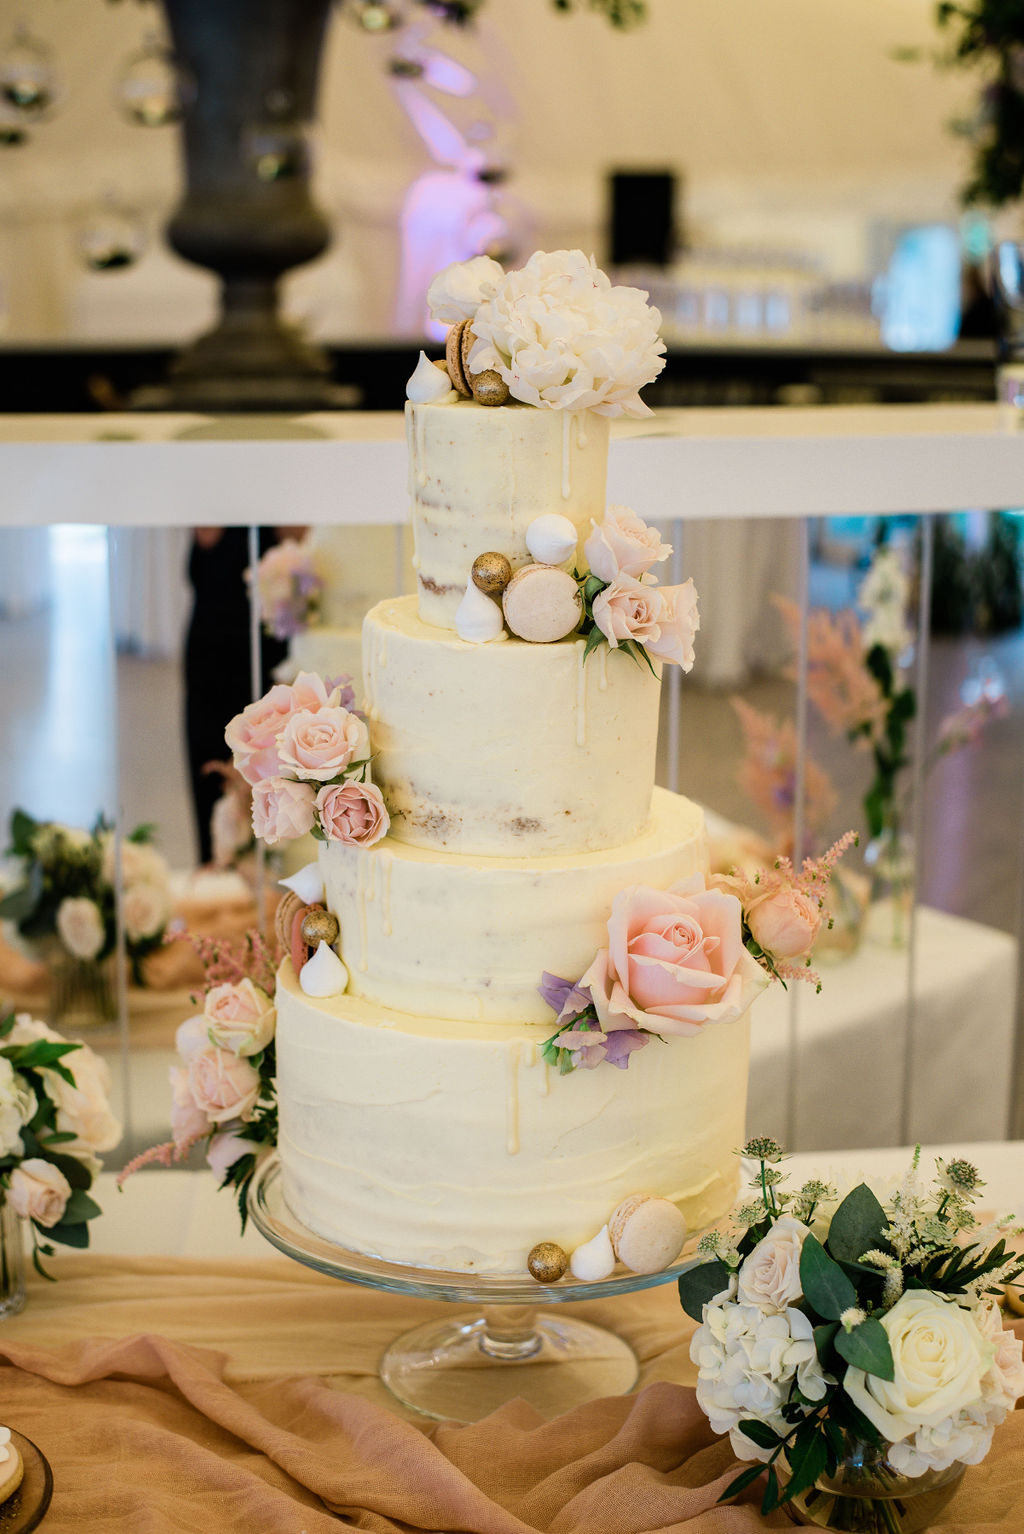 Buttercream cake at Chiswick House wedding, London | Sugar Plum Bakes